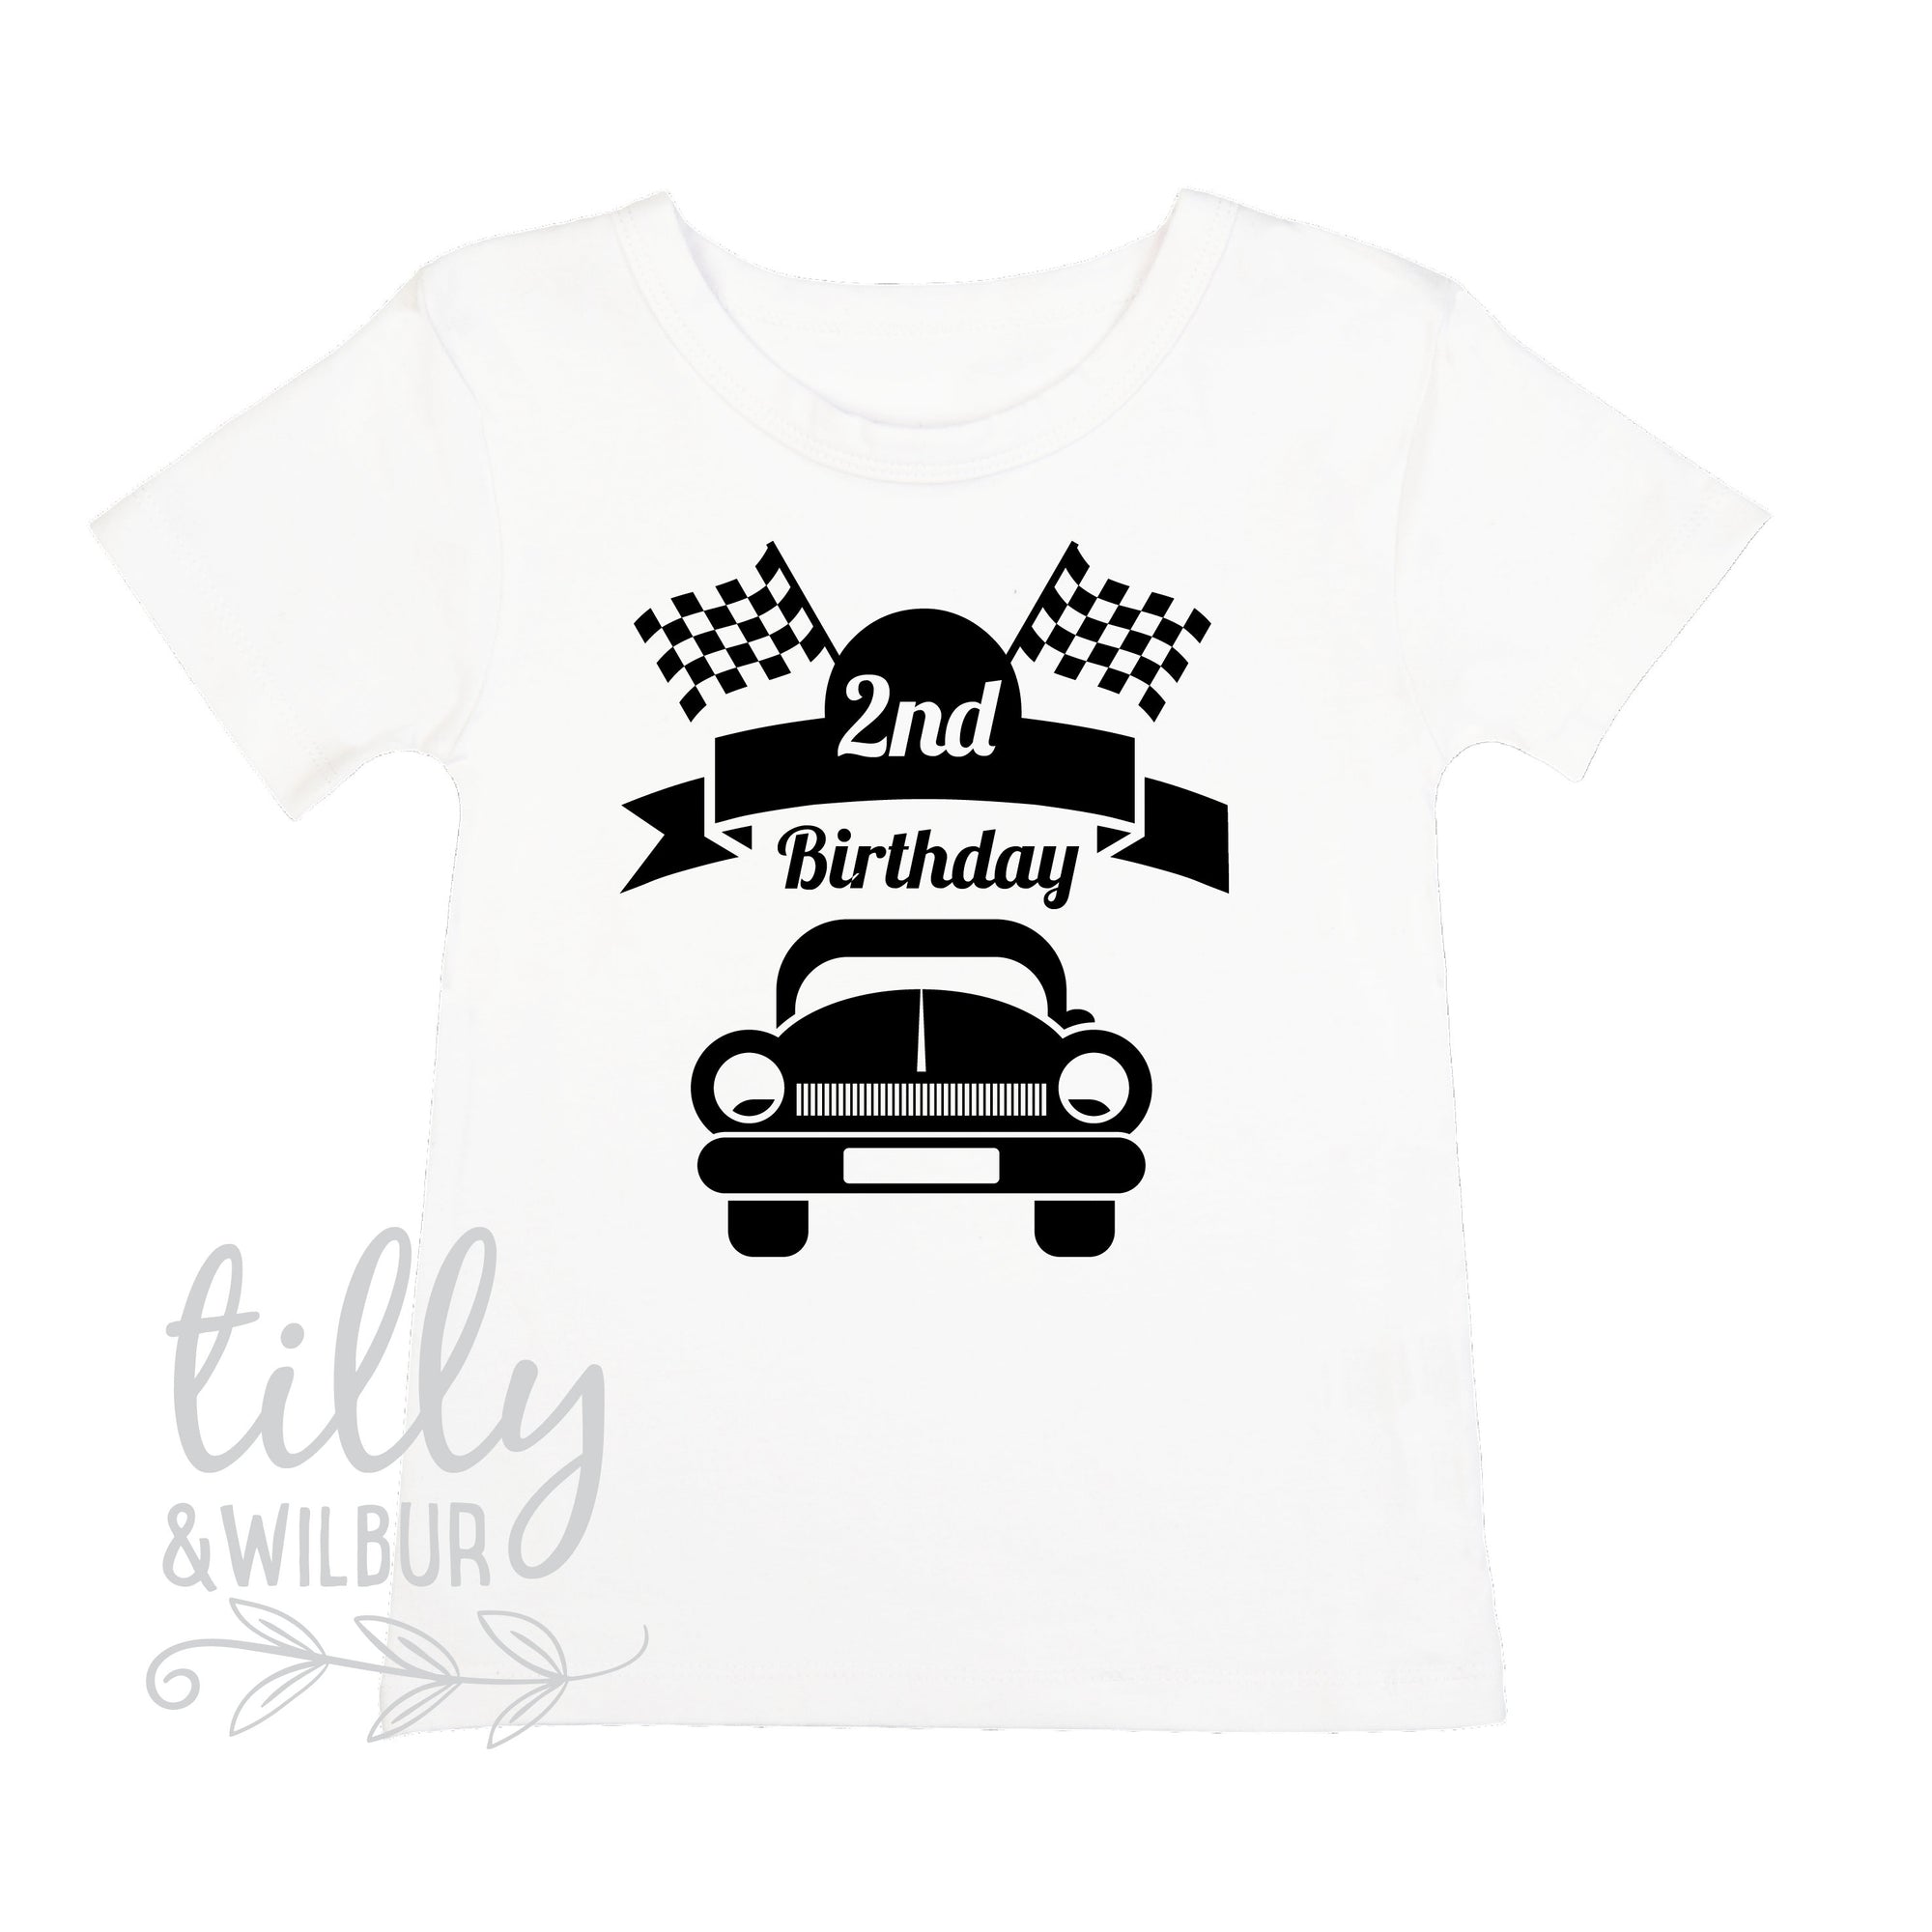 2nd Birthday T-Shirt For Boys With Racing Car, Boys Birthday Gift, 2 Today, I Am 2, Second Birthday, Two Today, Racing Car Design, Boy Racer